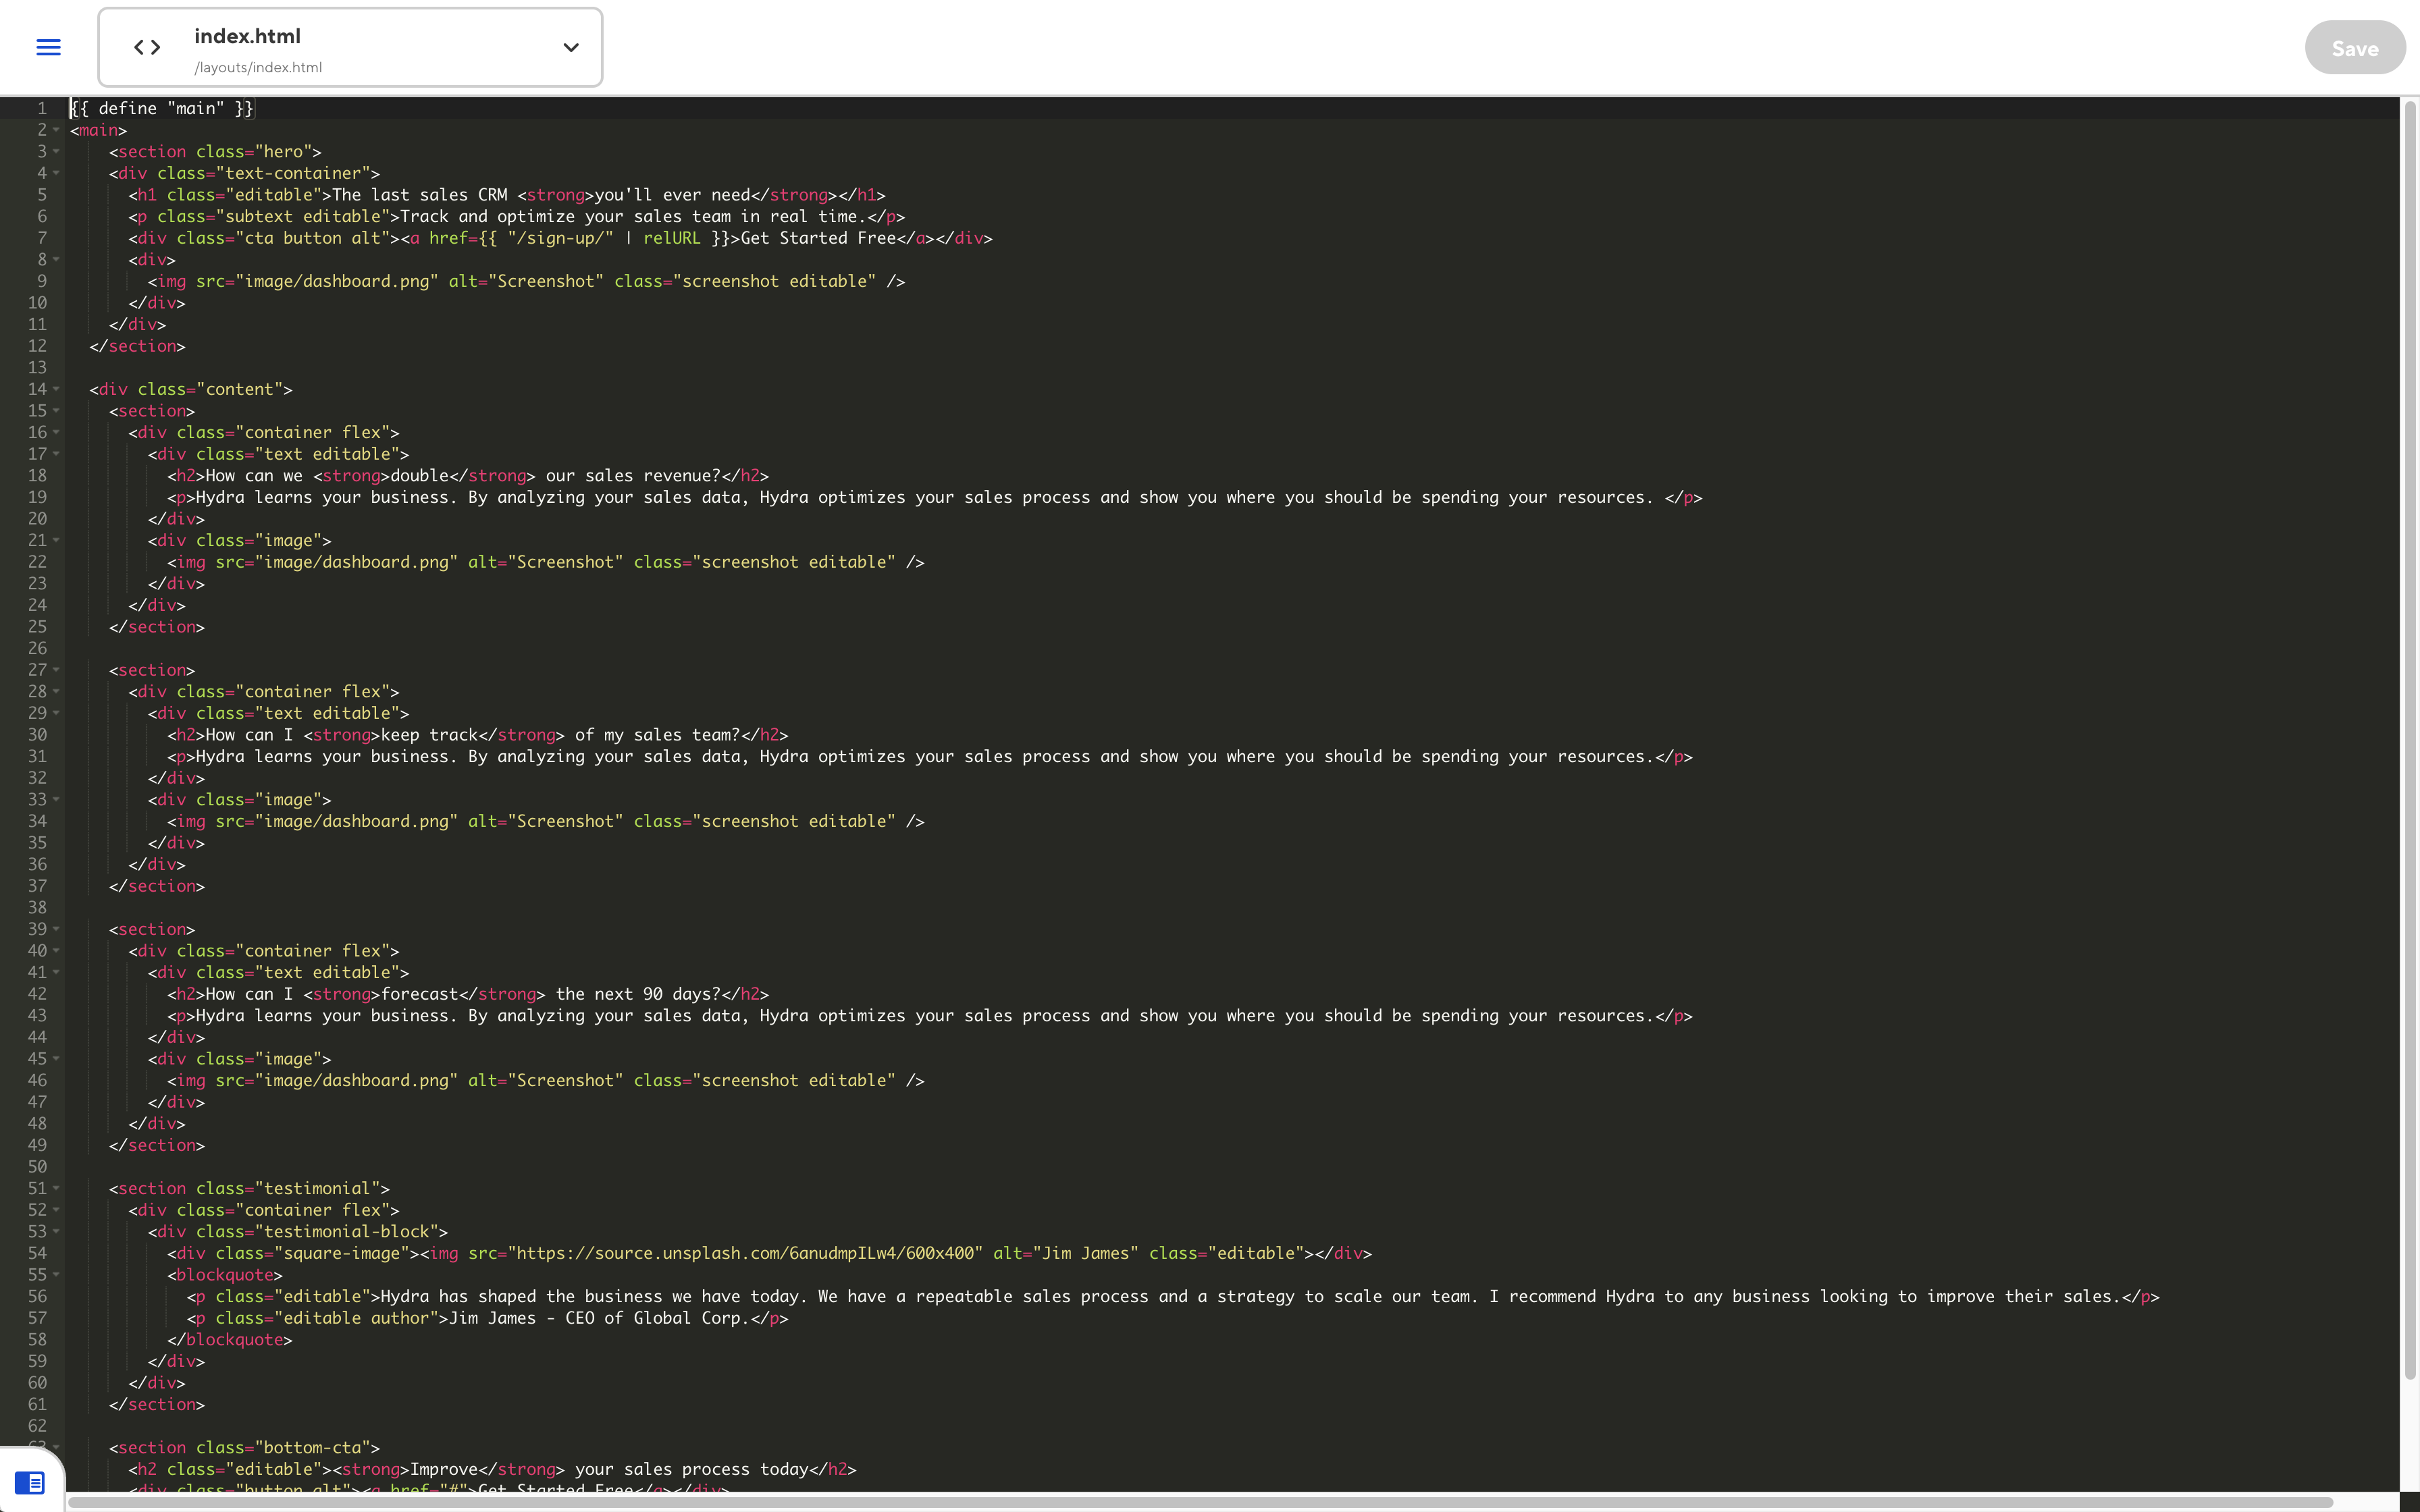 CloudCannon source editor screenshot